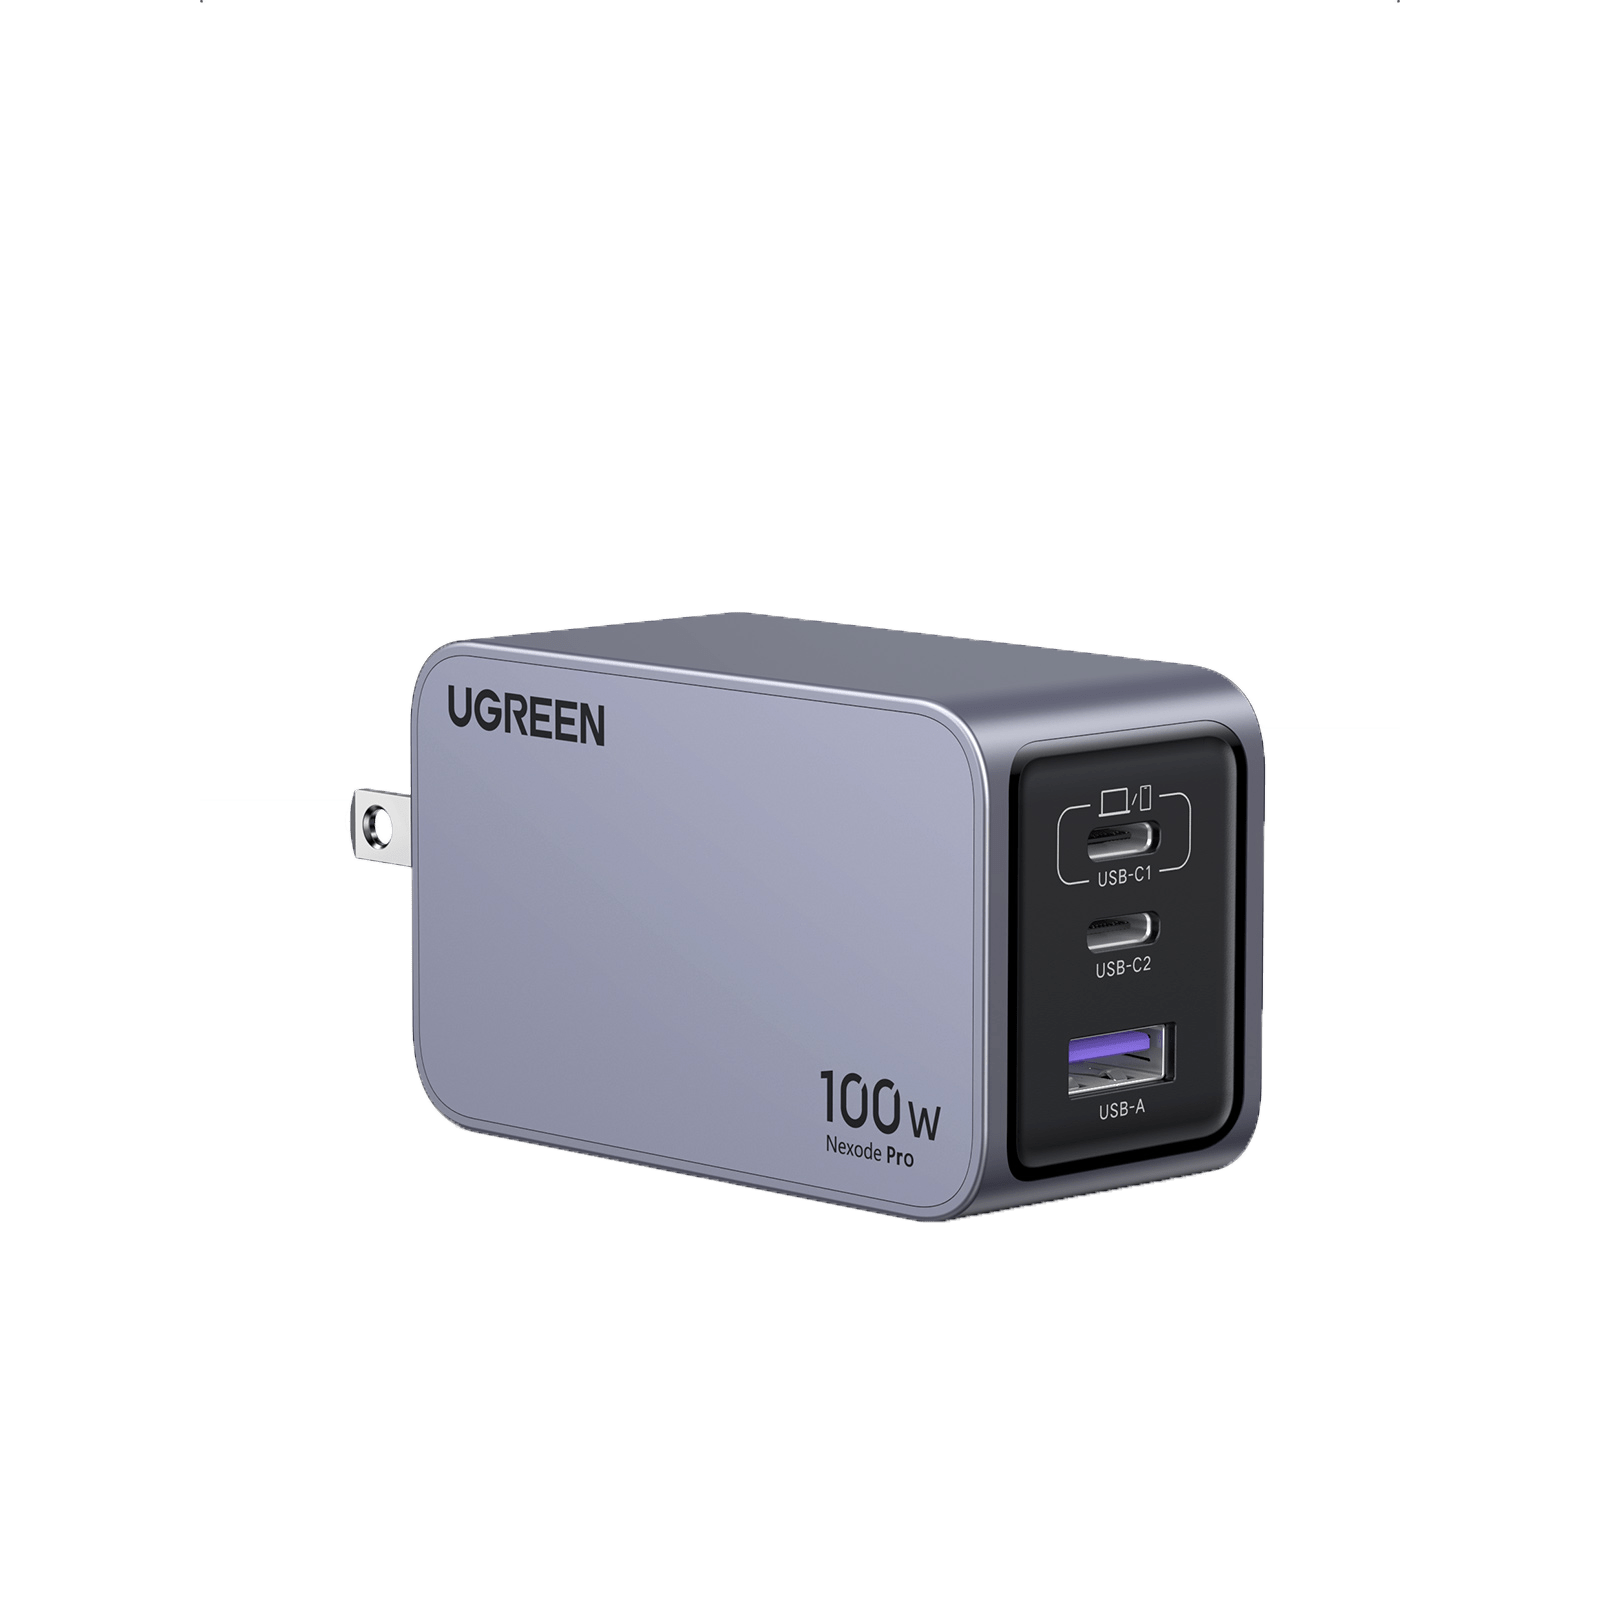 Nexode Pro 100W 3-Port GaN Fast Charger – UGREEN